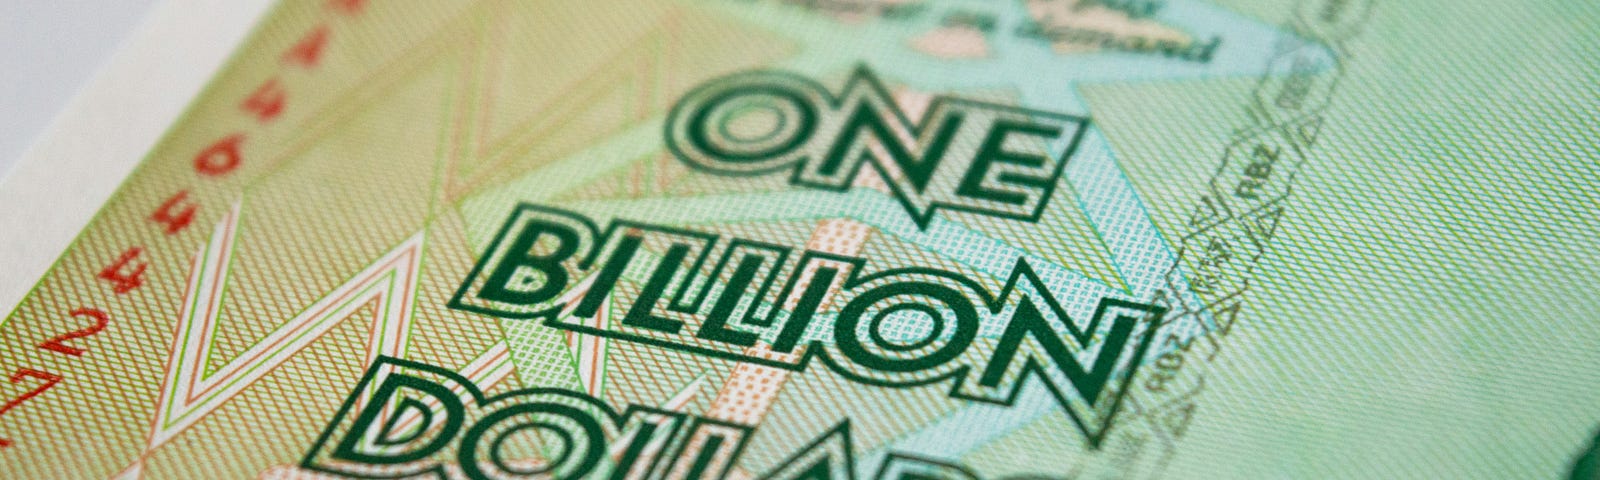 A one billion dollar bill